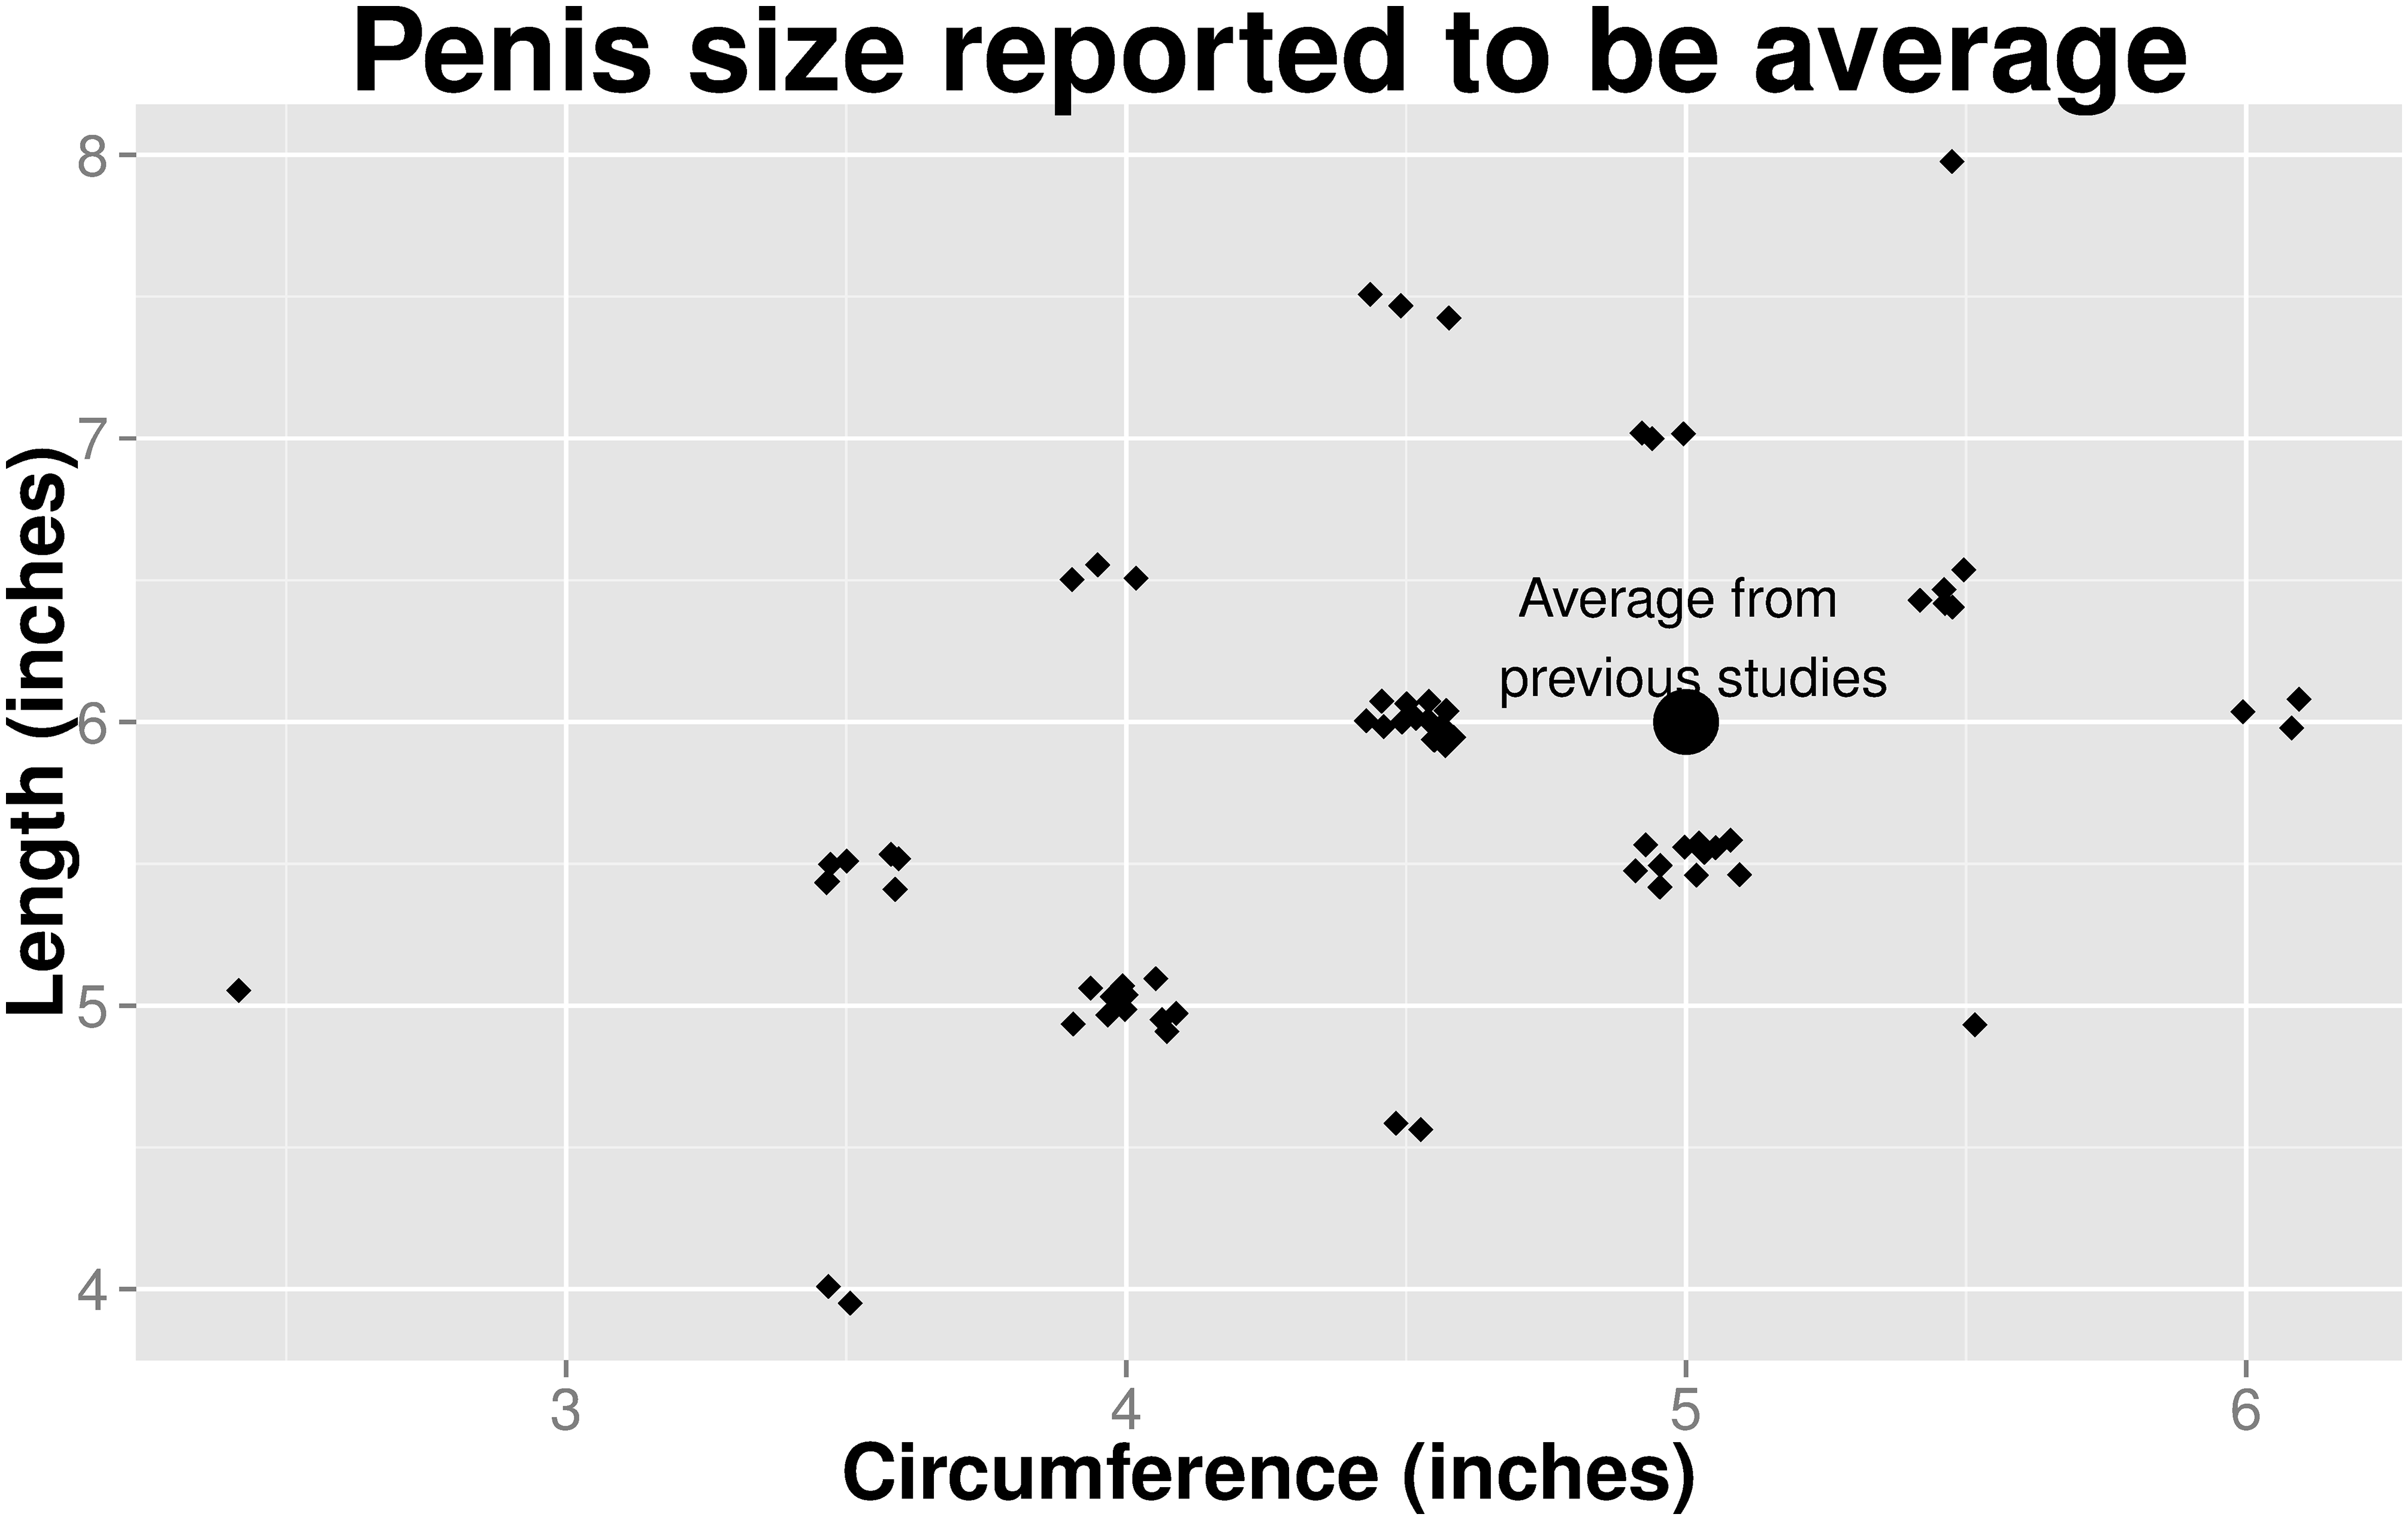 Gator reccomend women measure ideal penis size